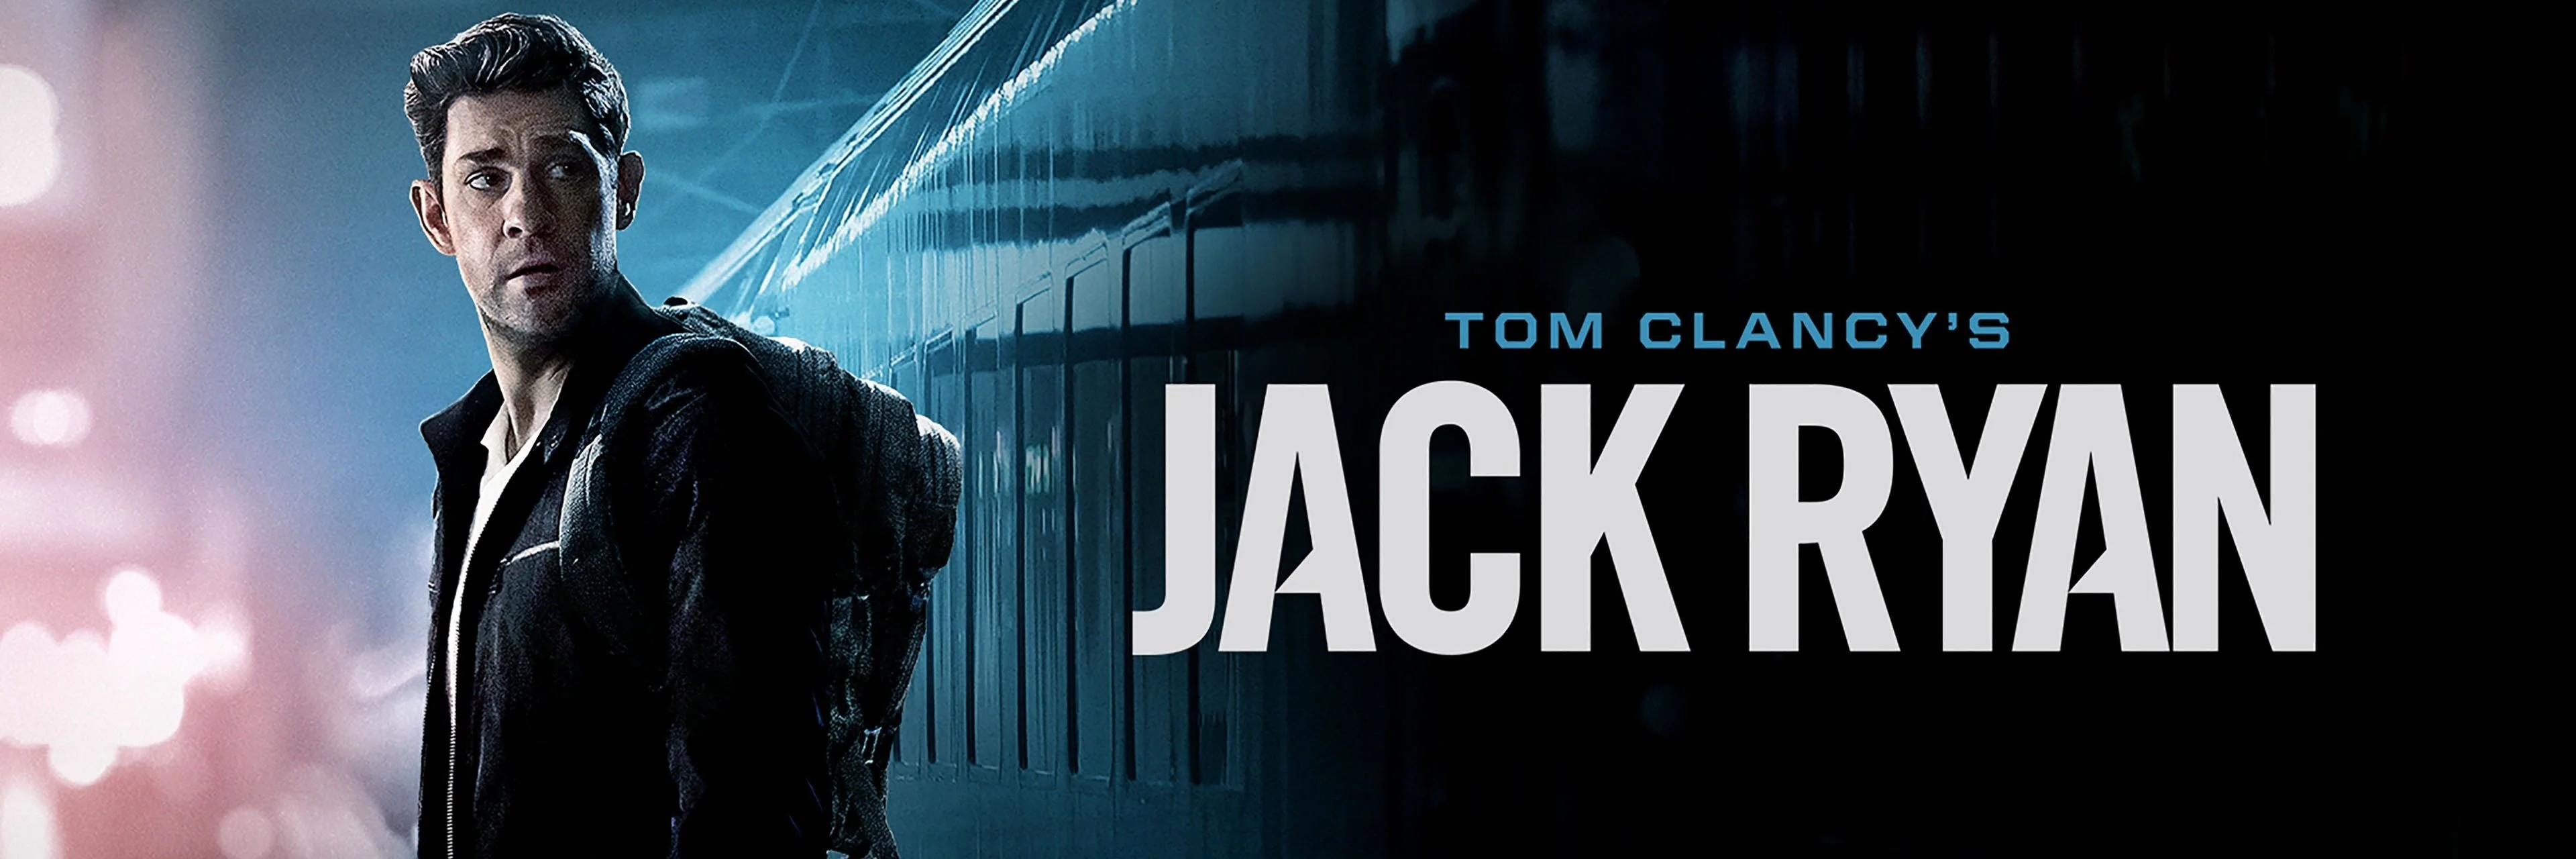 Tom Clancy's Jack Ryan 4K S01 2018 big poster